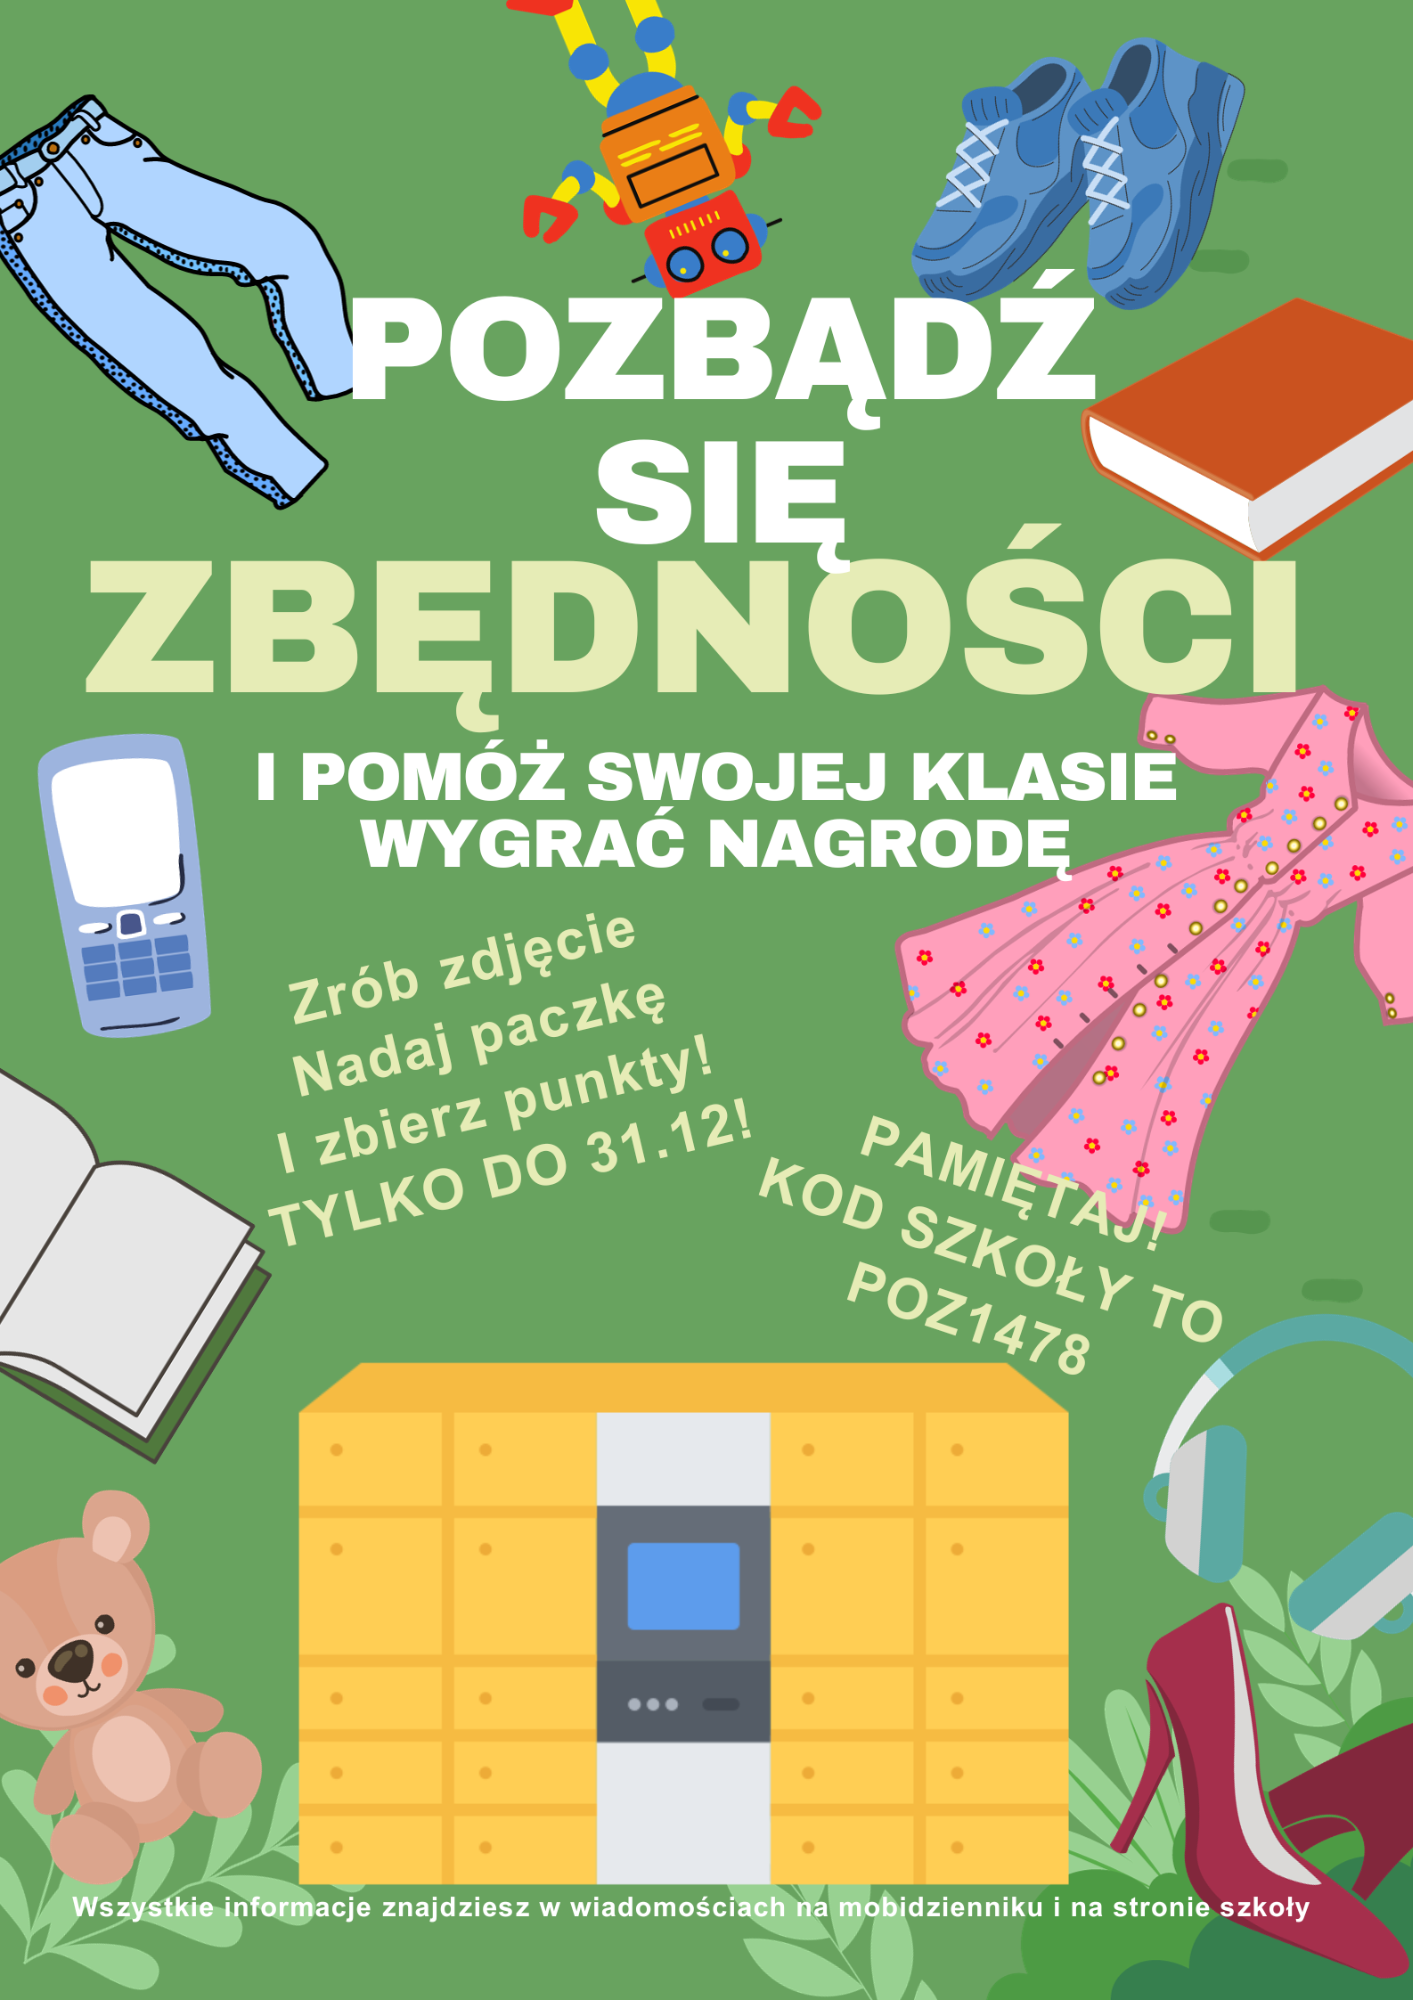 Program „Polska stolica recyklingu”